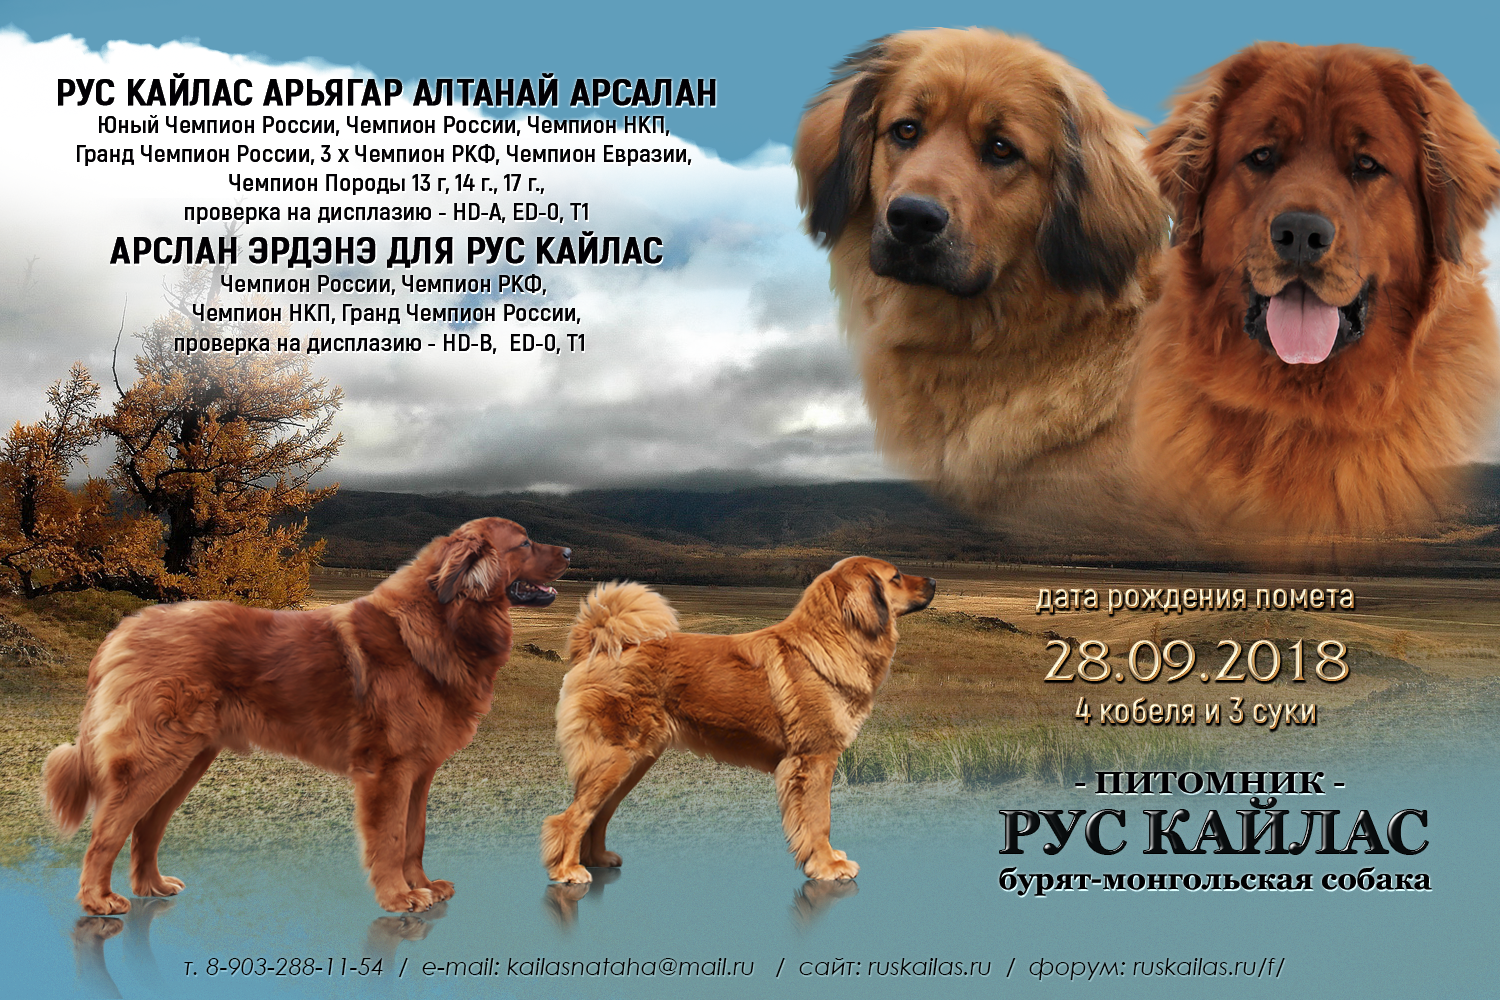 Buryat Mongolian dog5 (1)